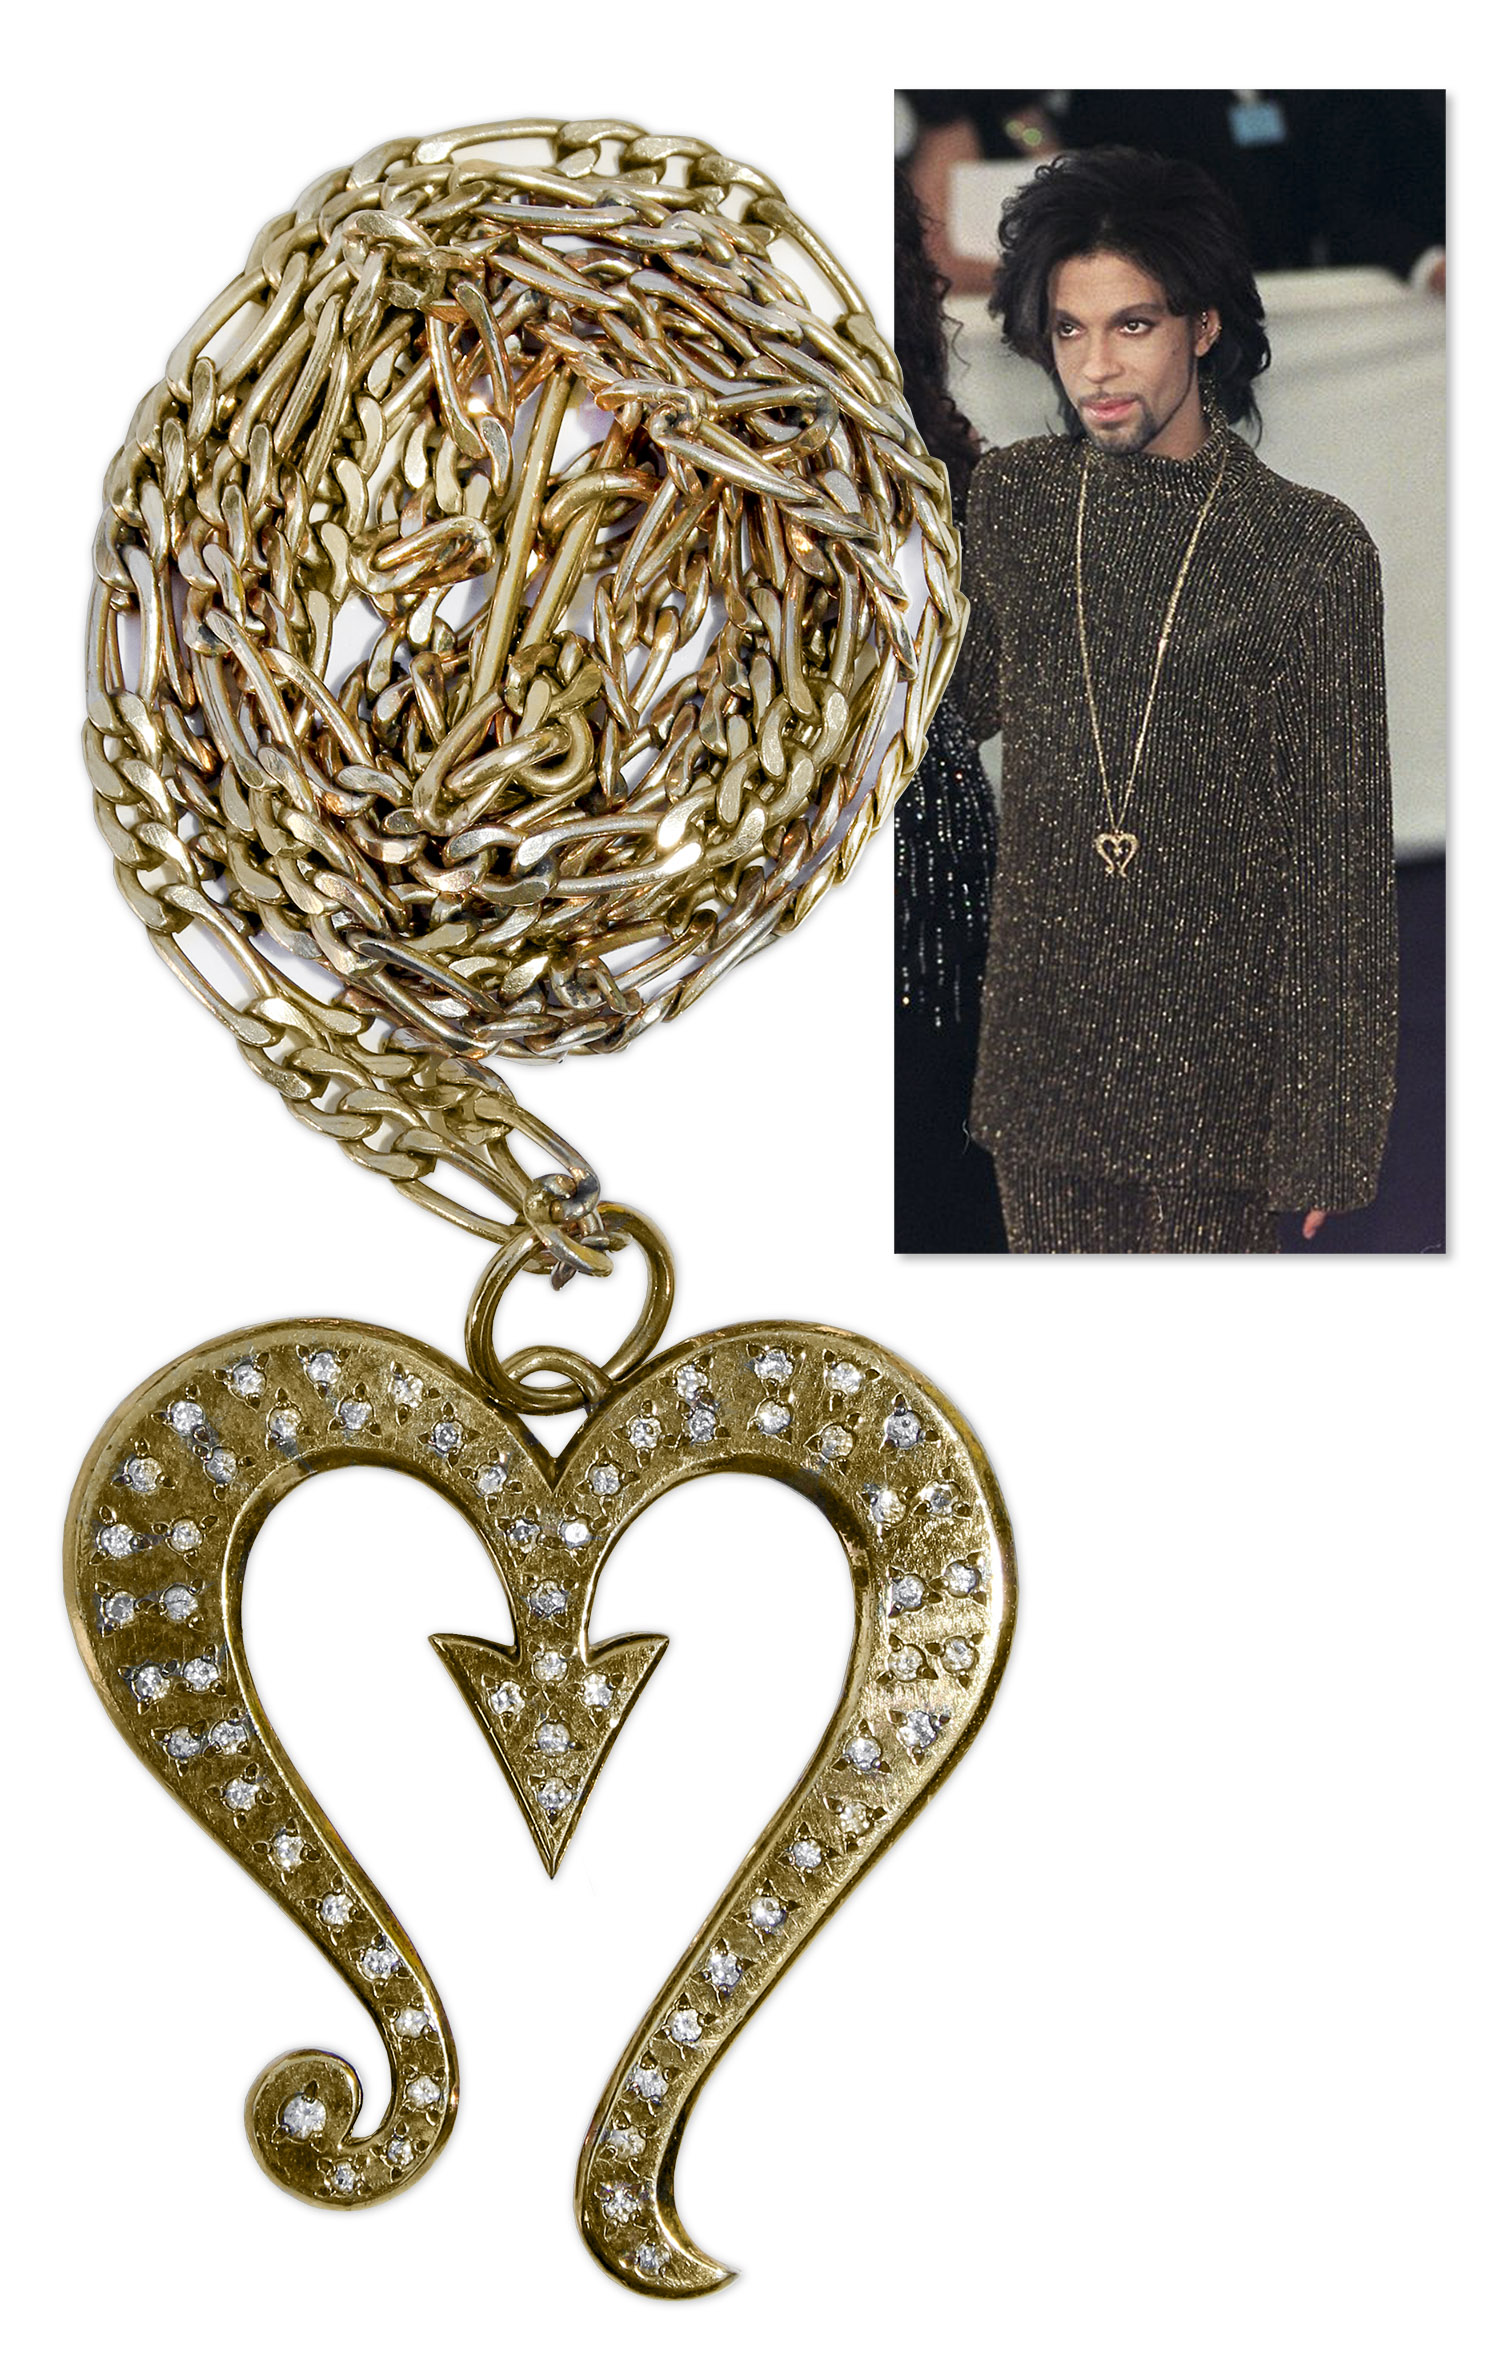 Prince Worn Jewelry Scorpio Diamond Necklace Worn by Prince When he Met Prince Charles